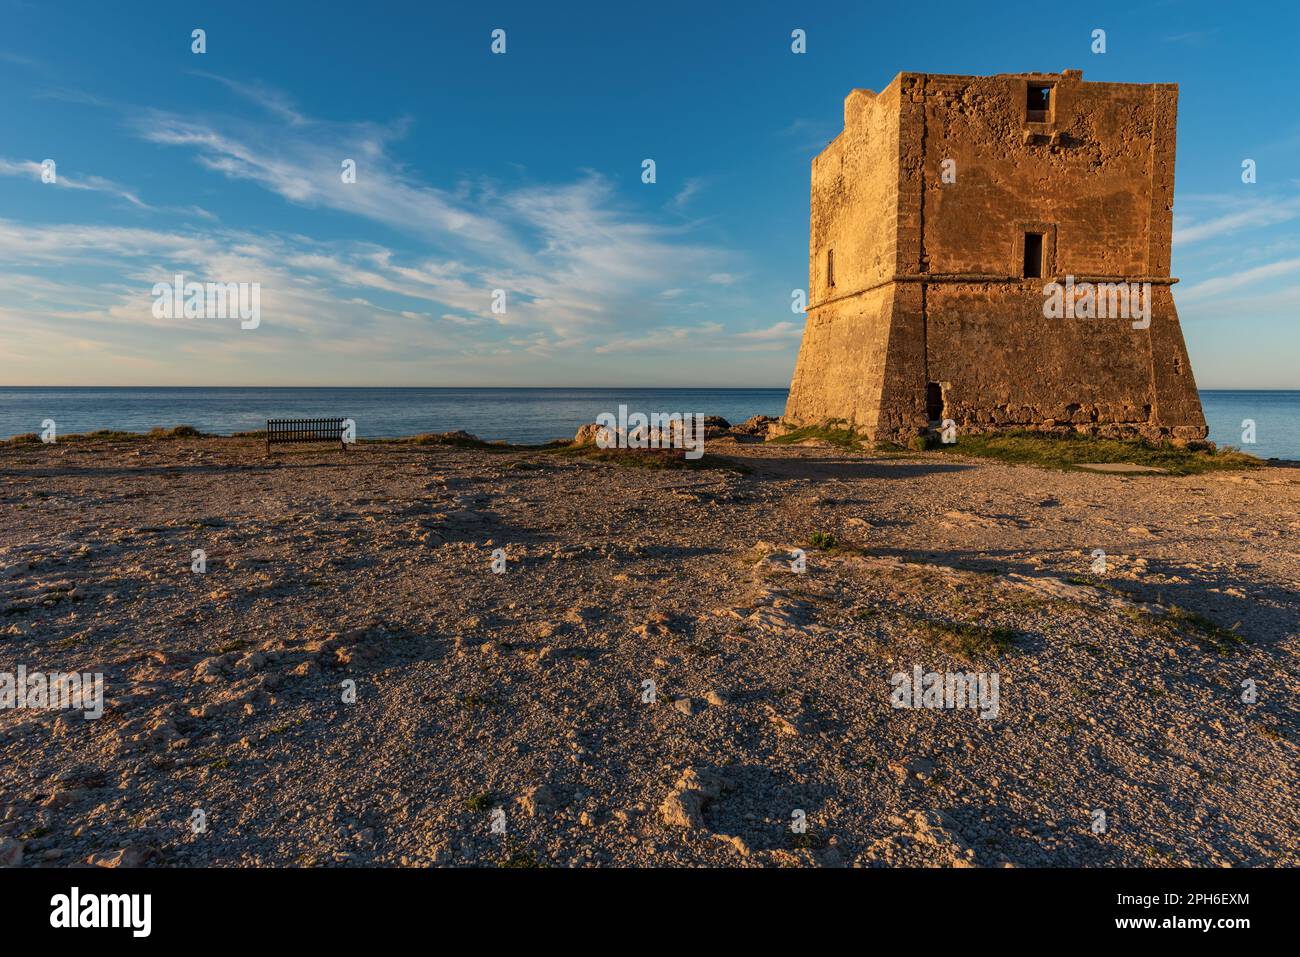 The Saracen tower of Pozzillo, Sicily Stock Photo